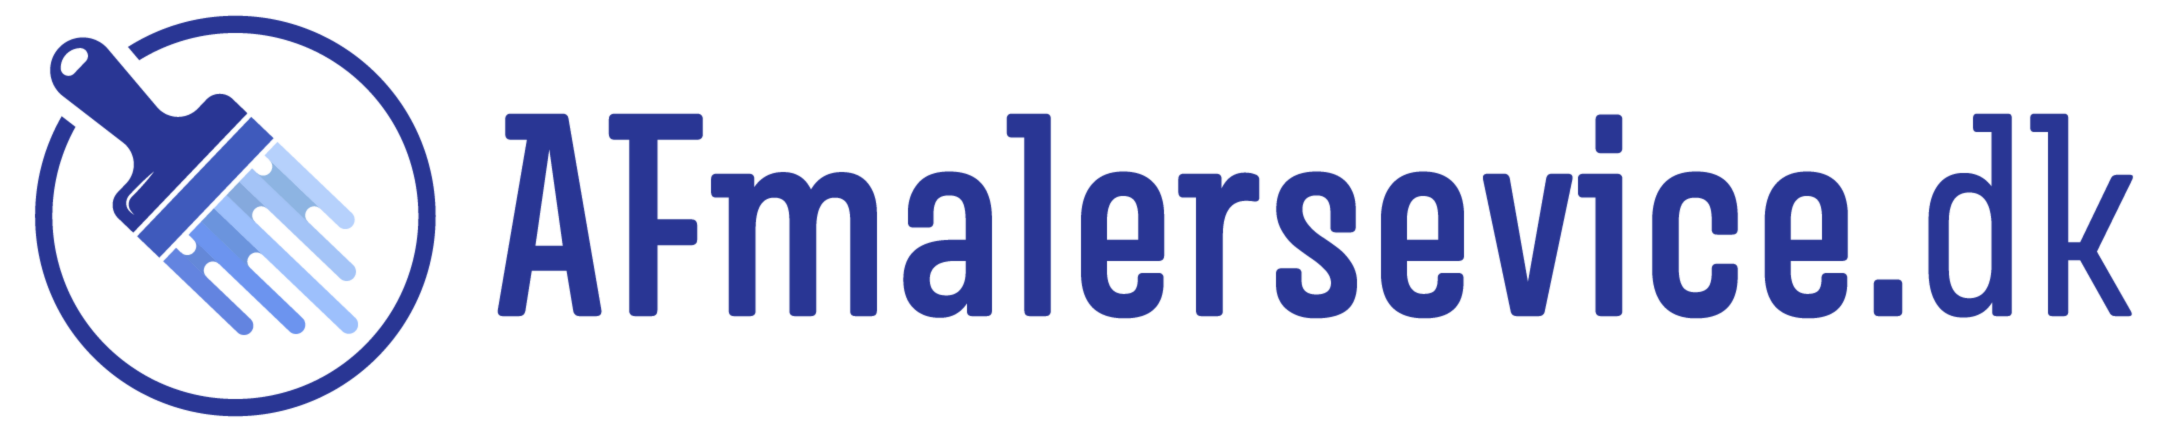 AFMalerservice logo